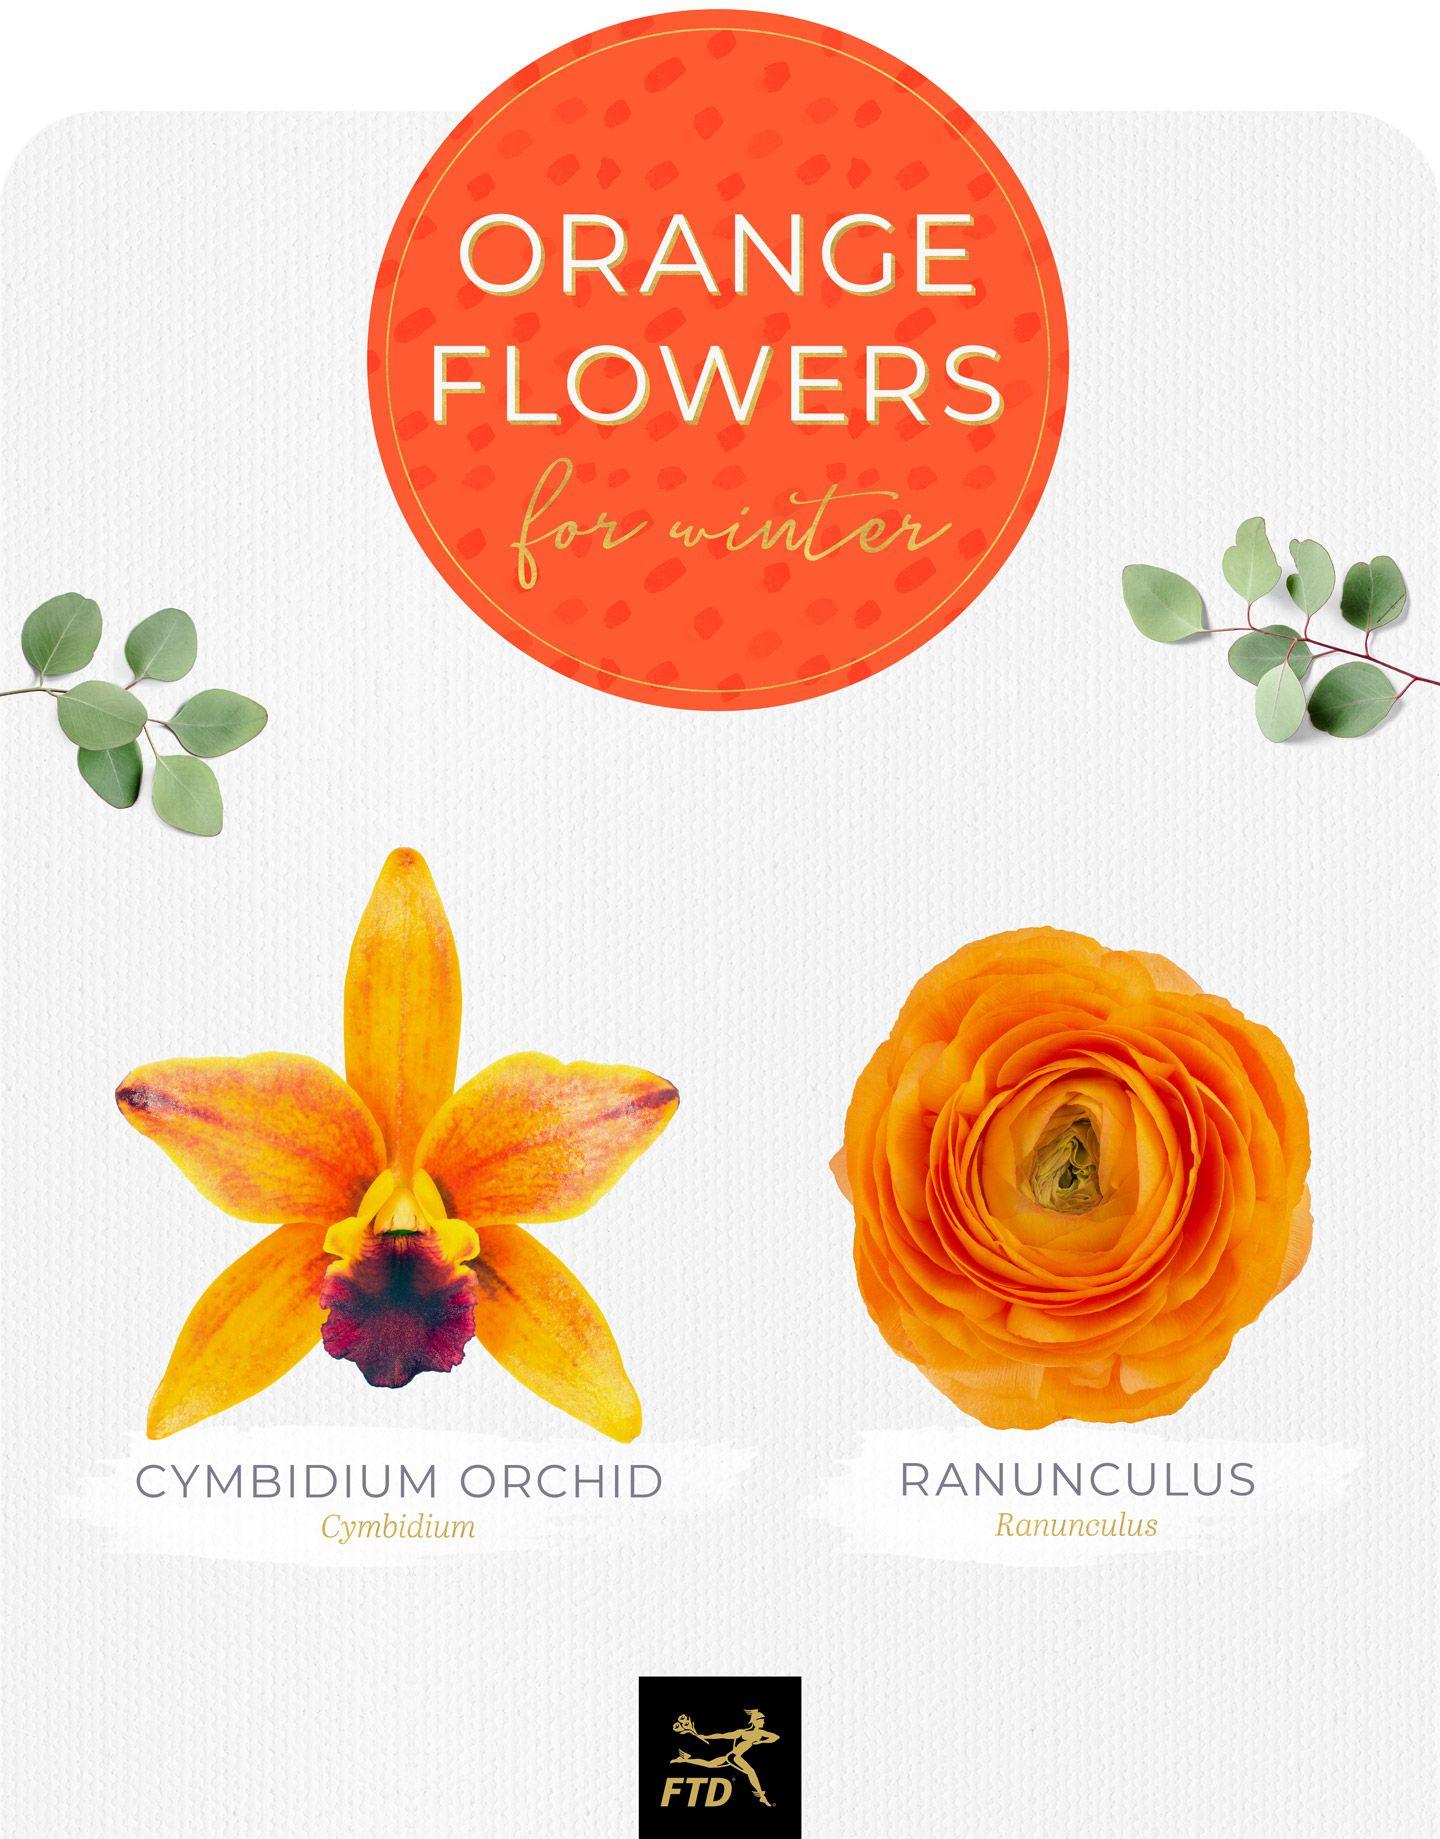 Orange Flower Logo - Types of Orange Flowers